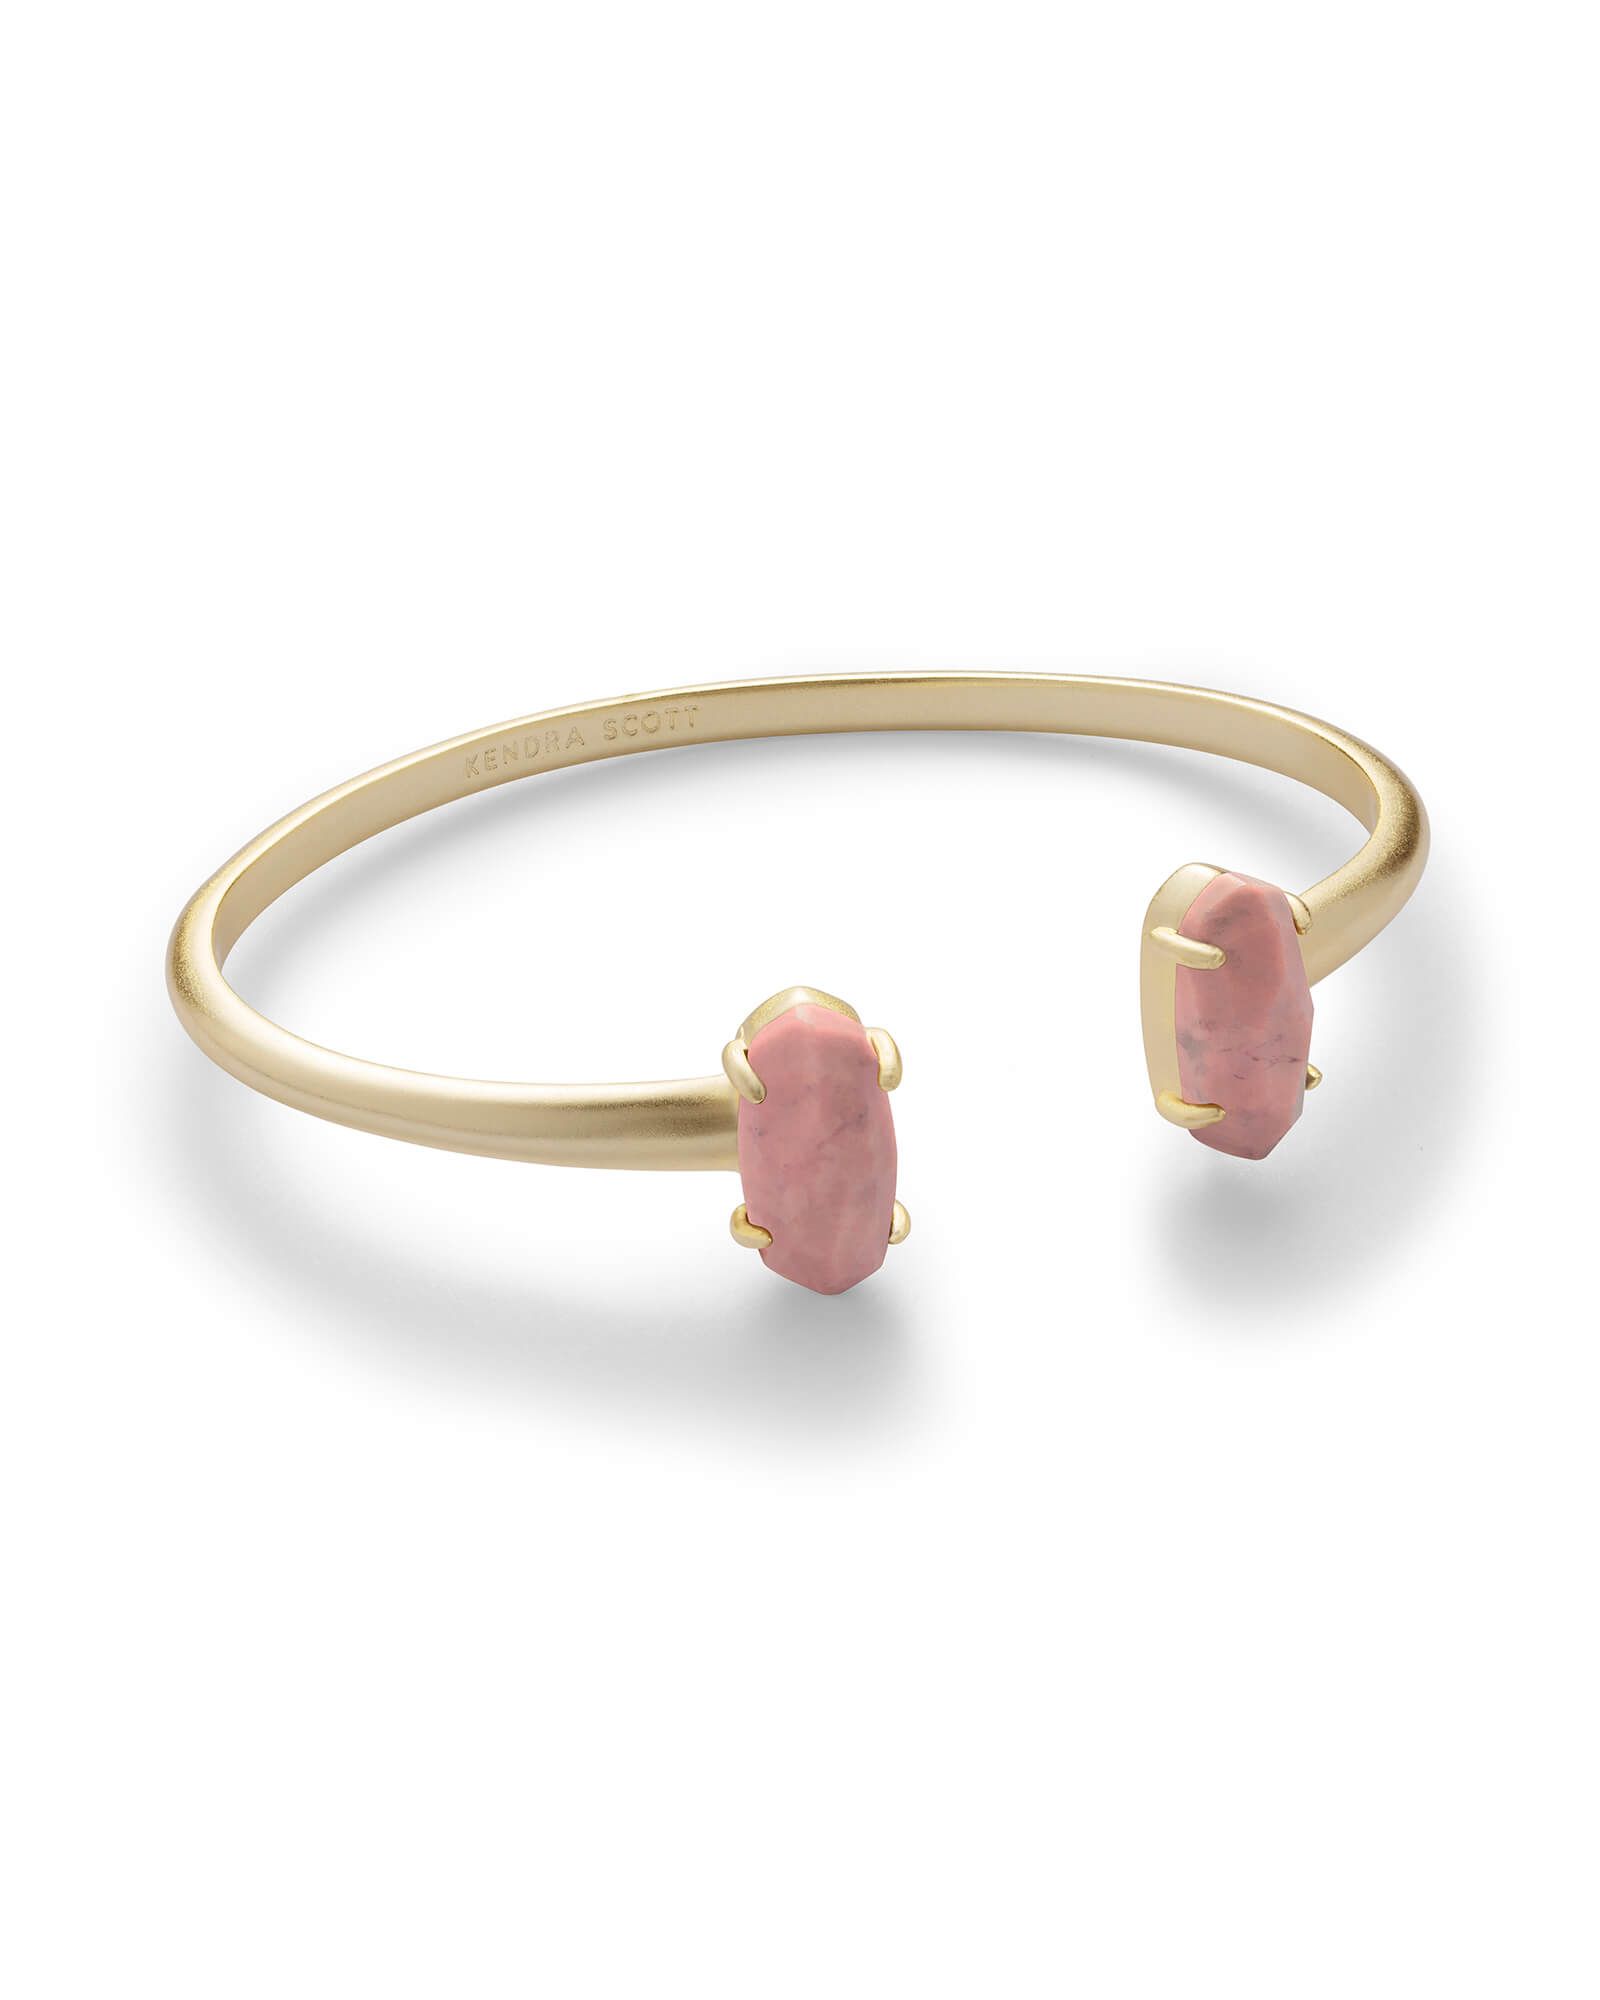 Edie Gold Cuff Bracelet in Pink Rhodonite | Kendra Scott